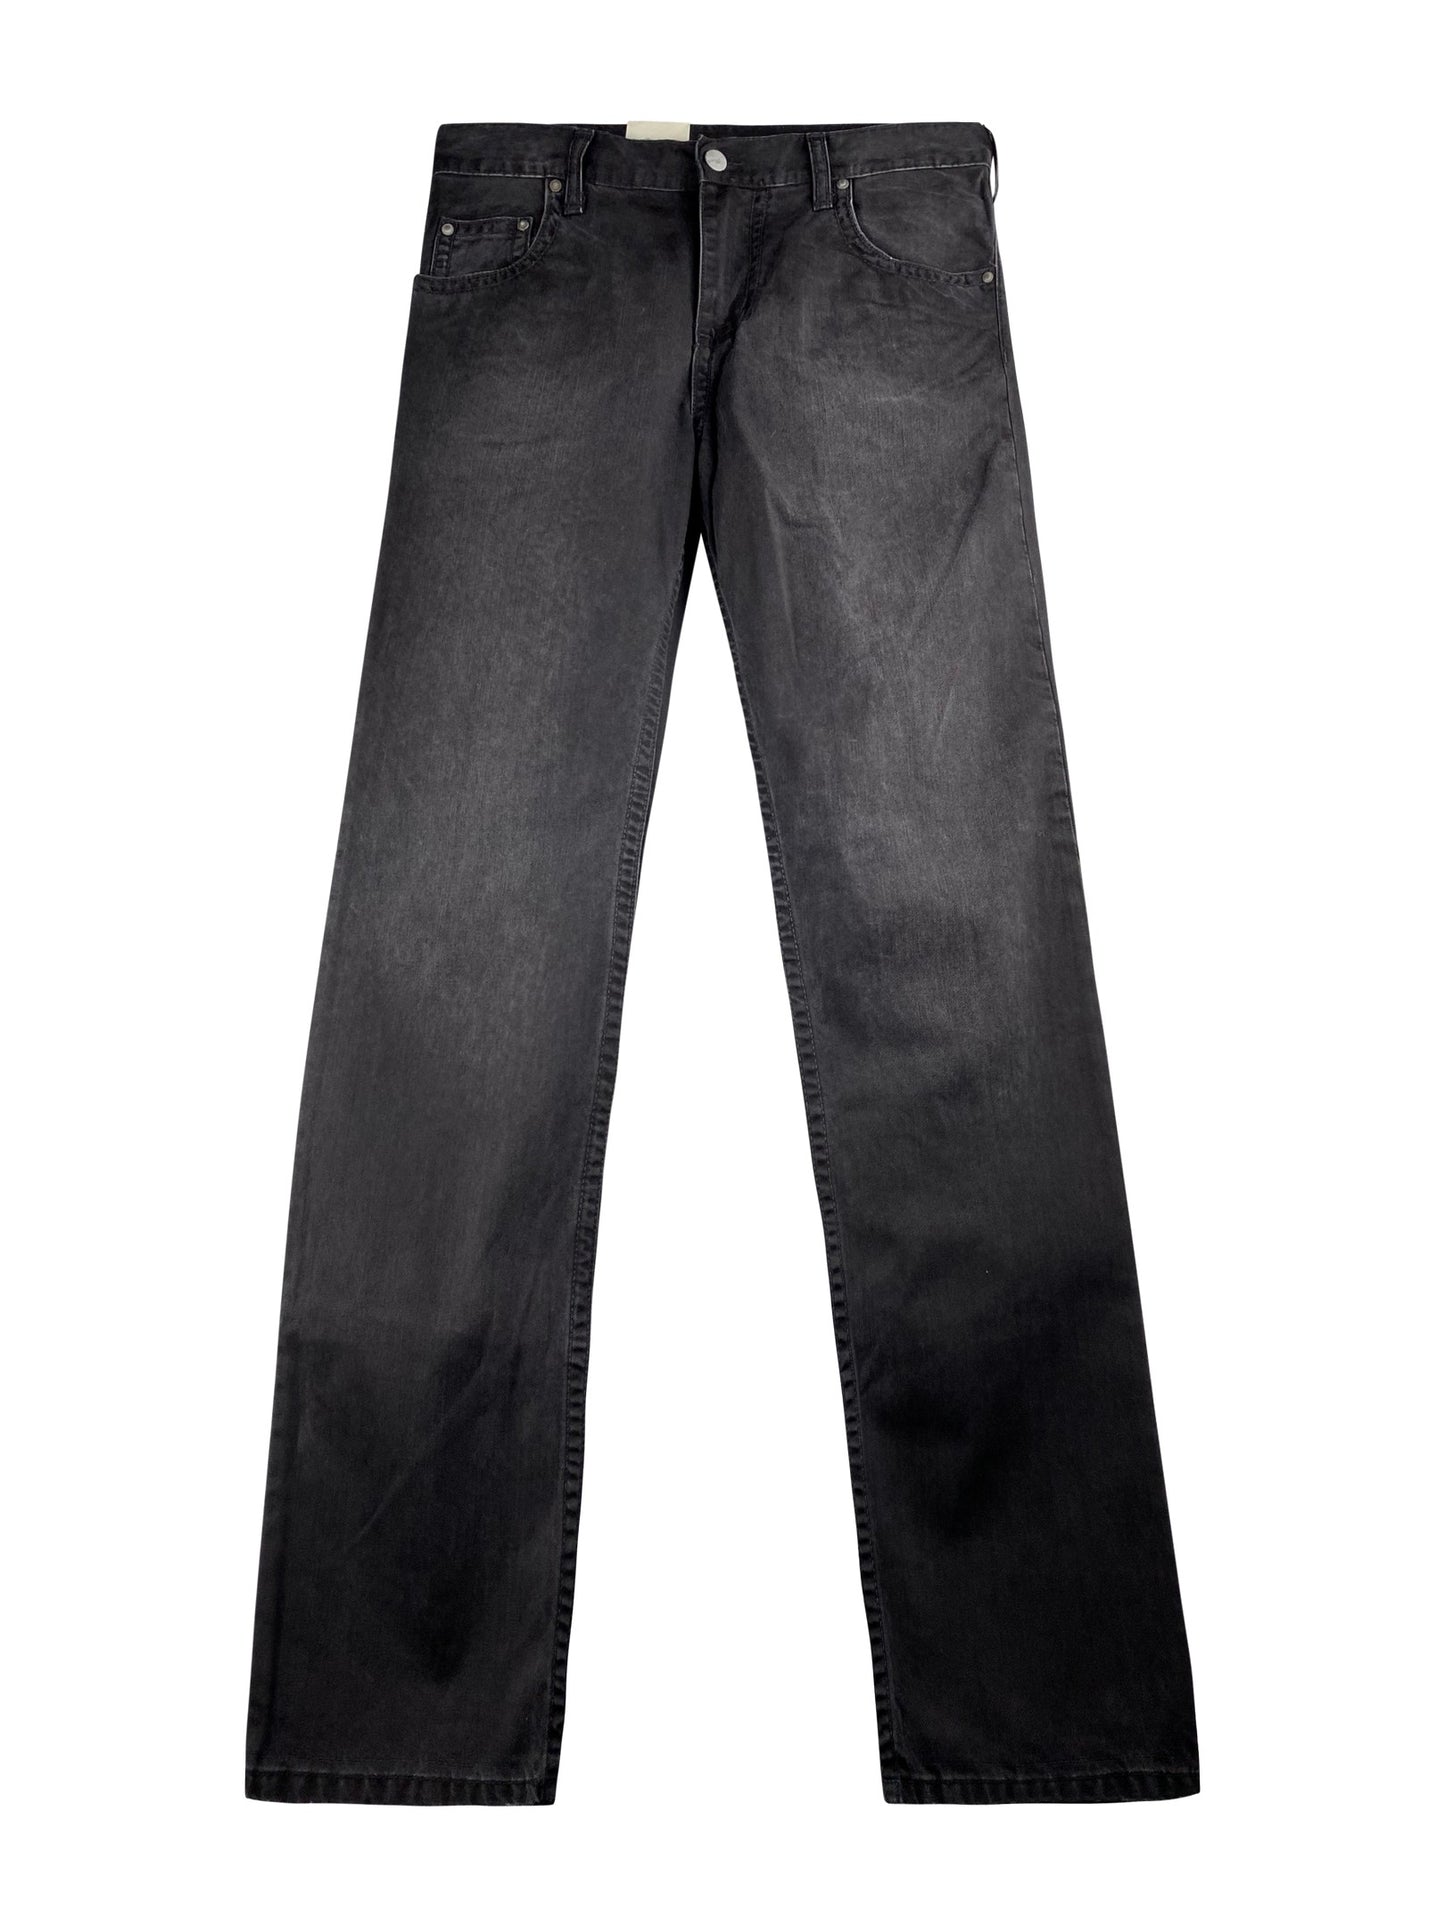 Carhartt Jeans “Slim Pant Louisiana” -black vintage washed